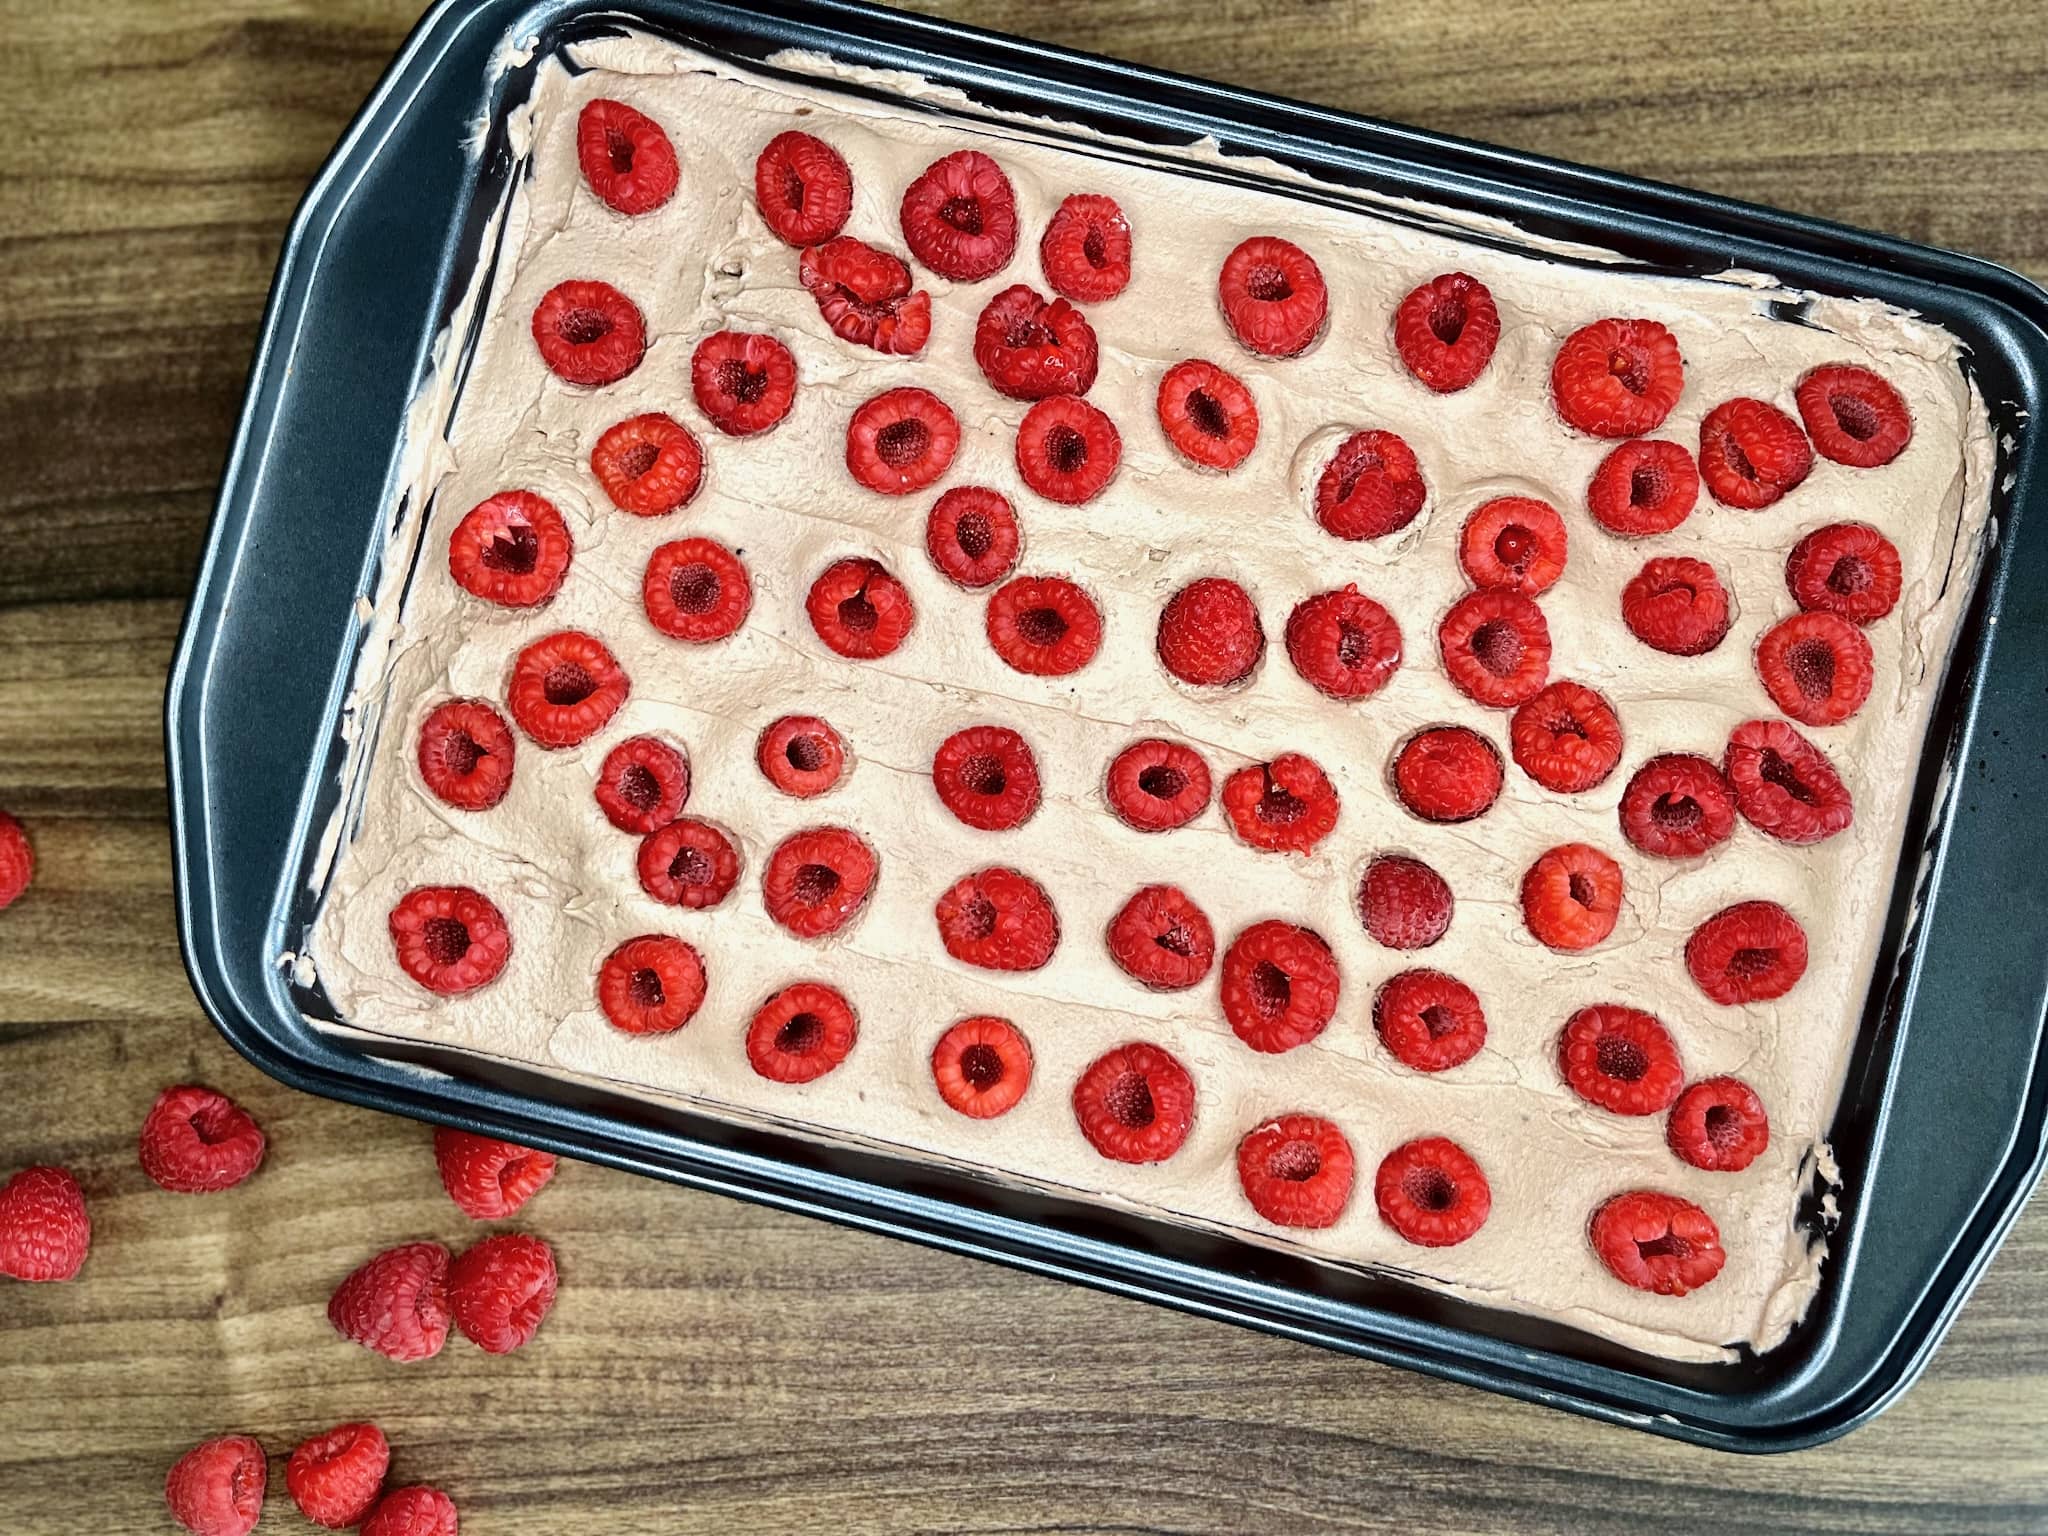 Raspberries arranged on top of the cake